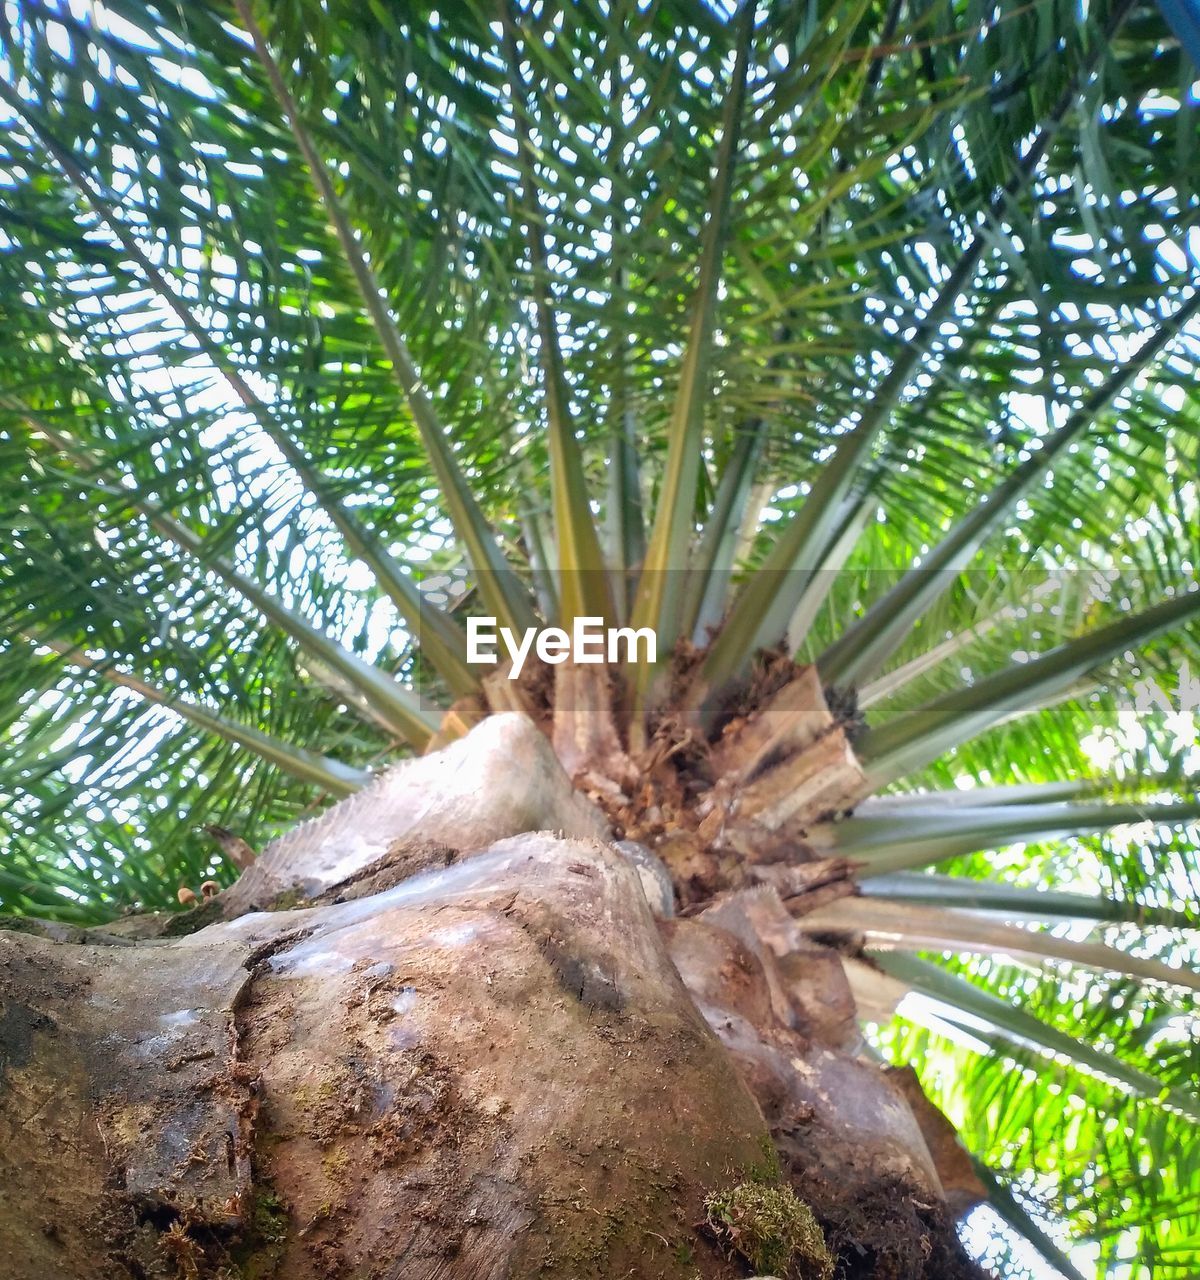 CLOSE-UP OF PALM TREE